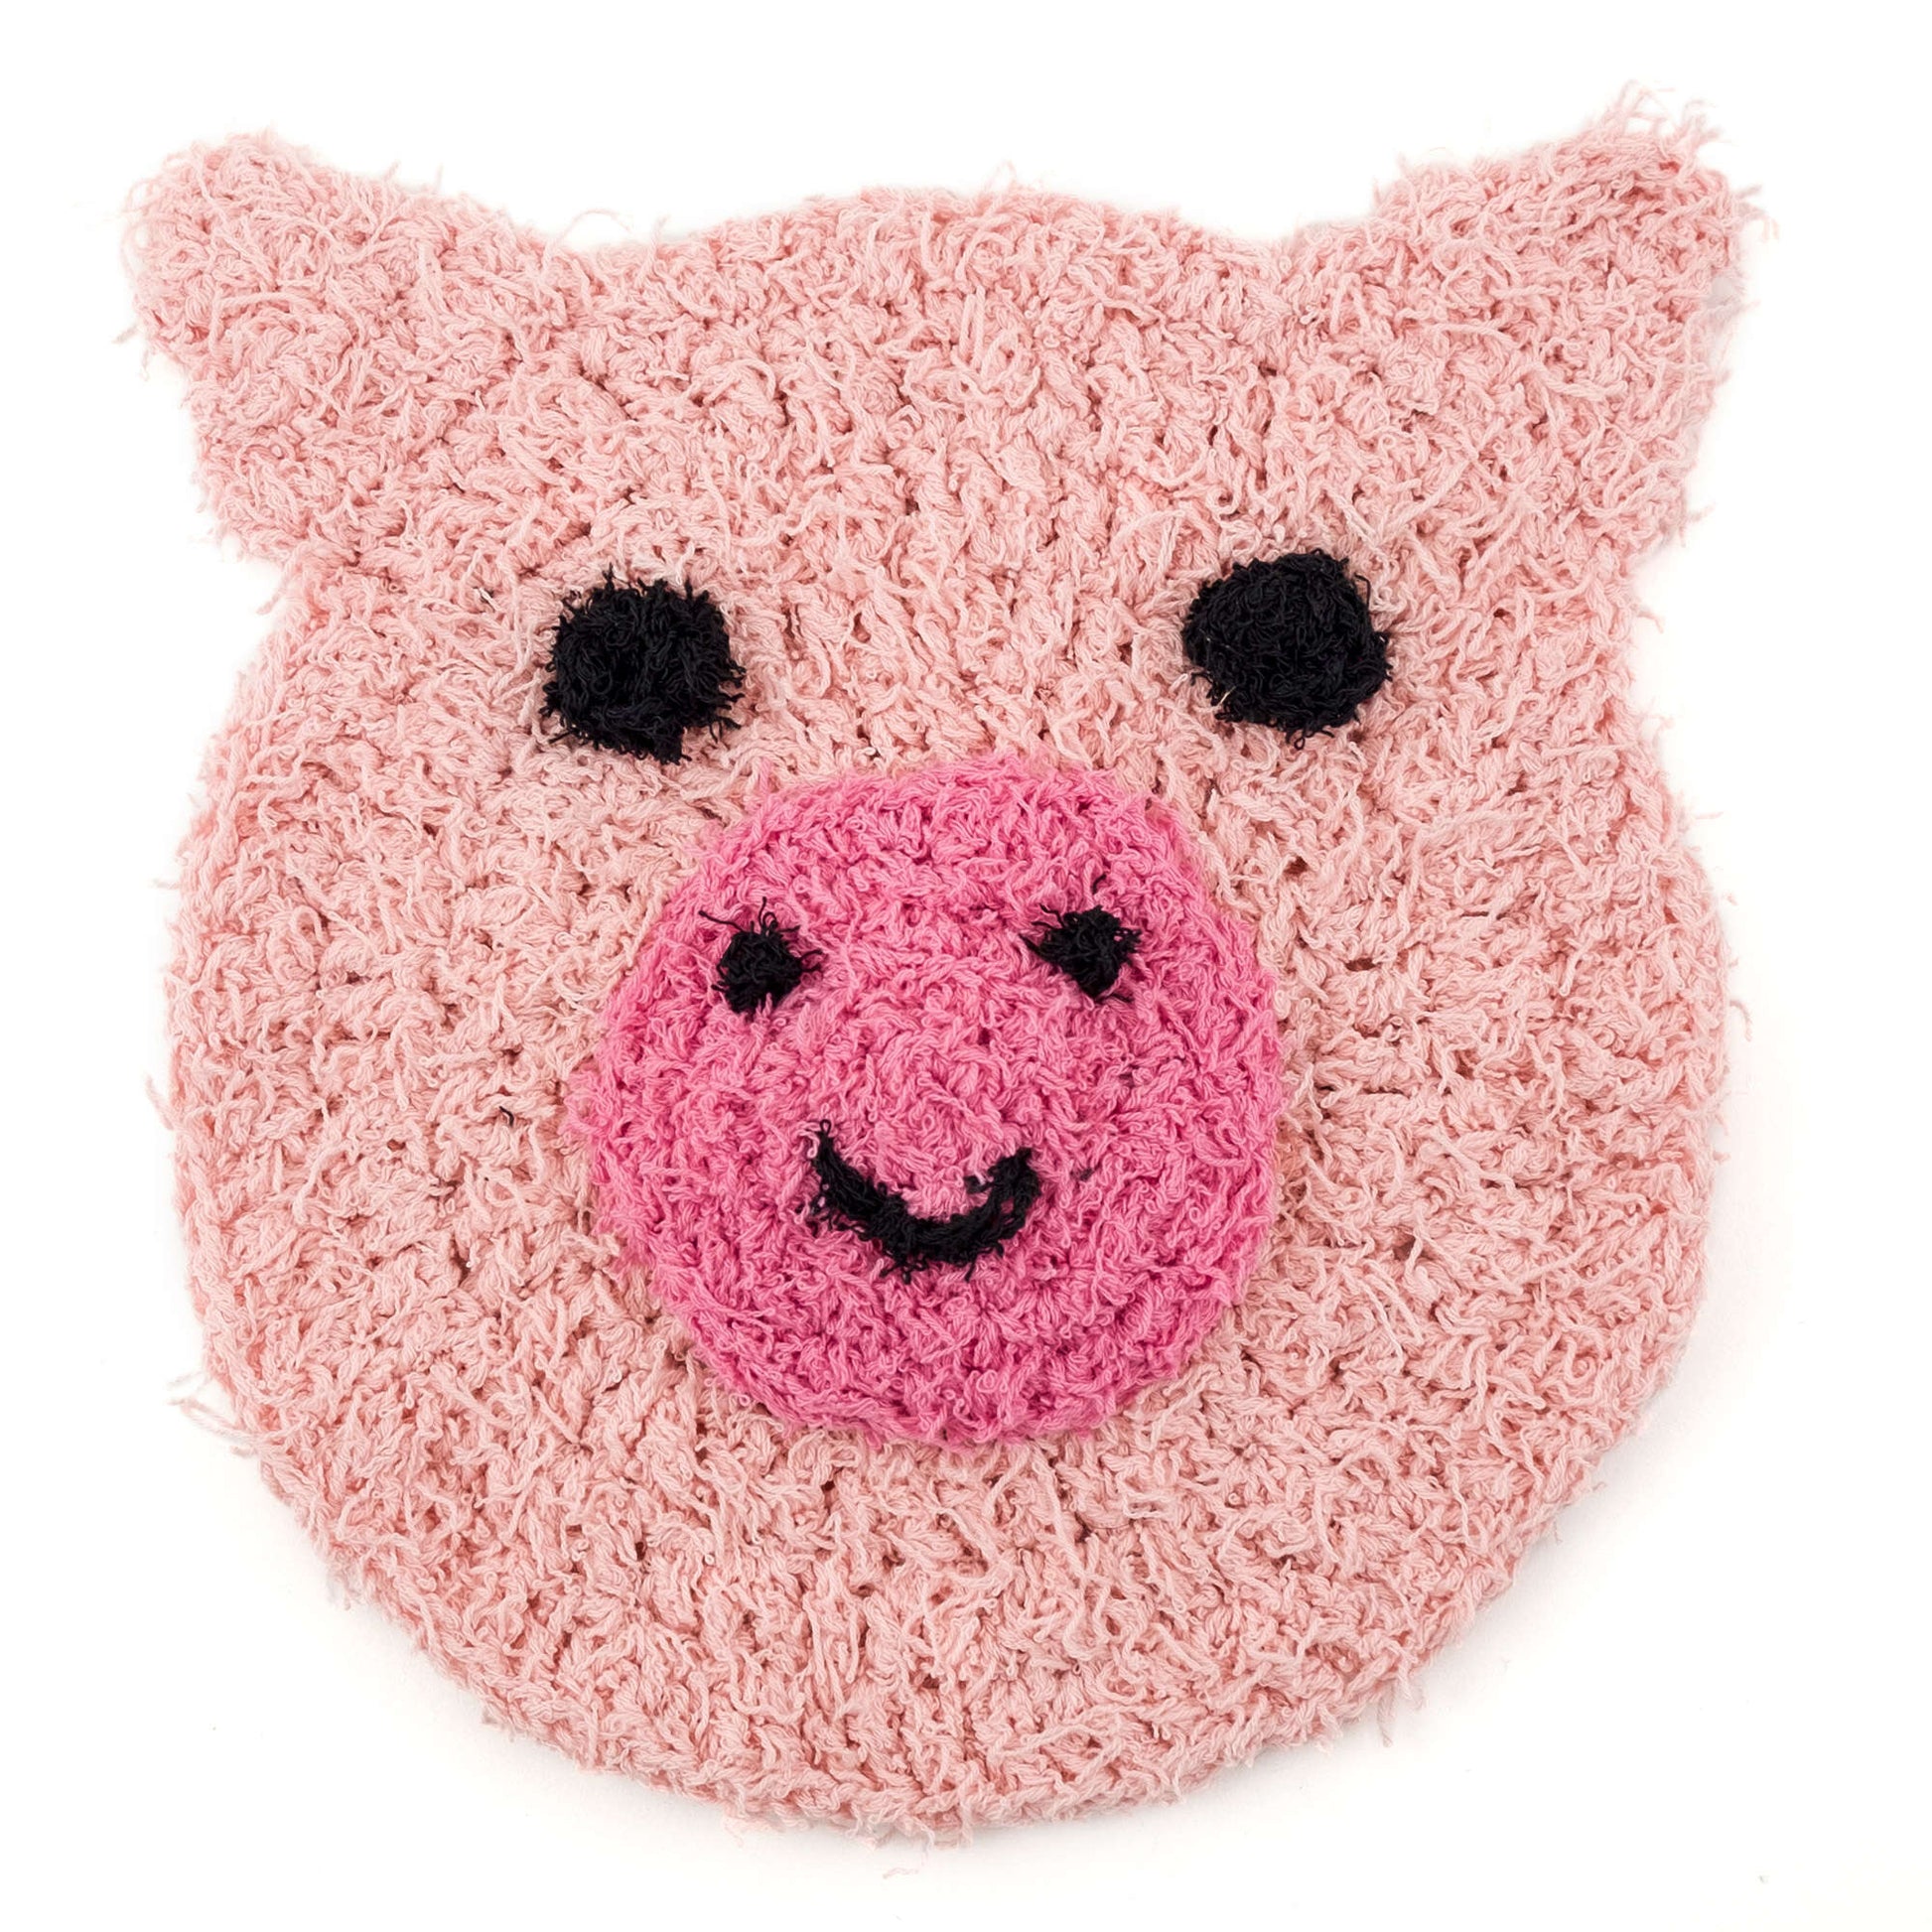 Free Red Heart Crochet Playful Pig Scrubby Pattern